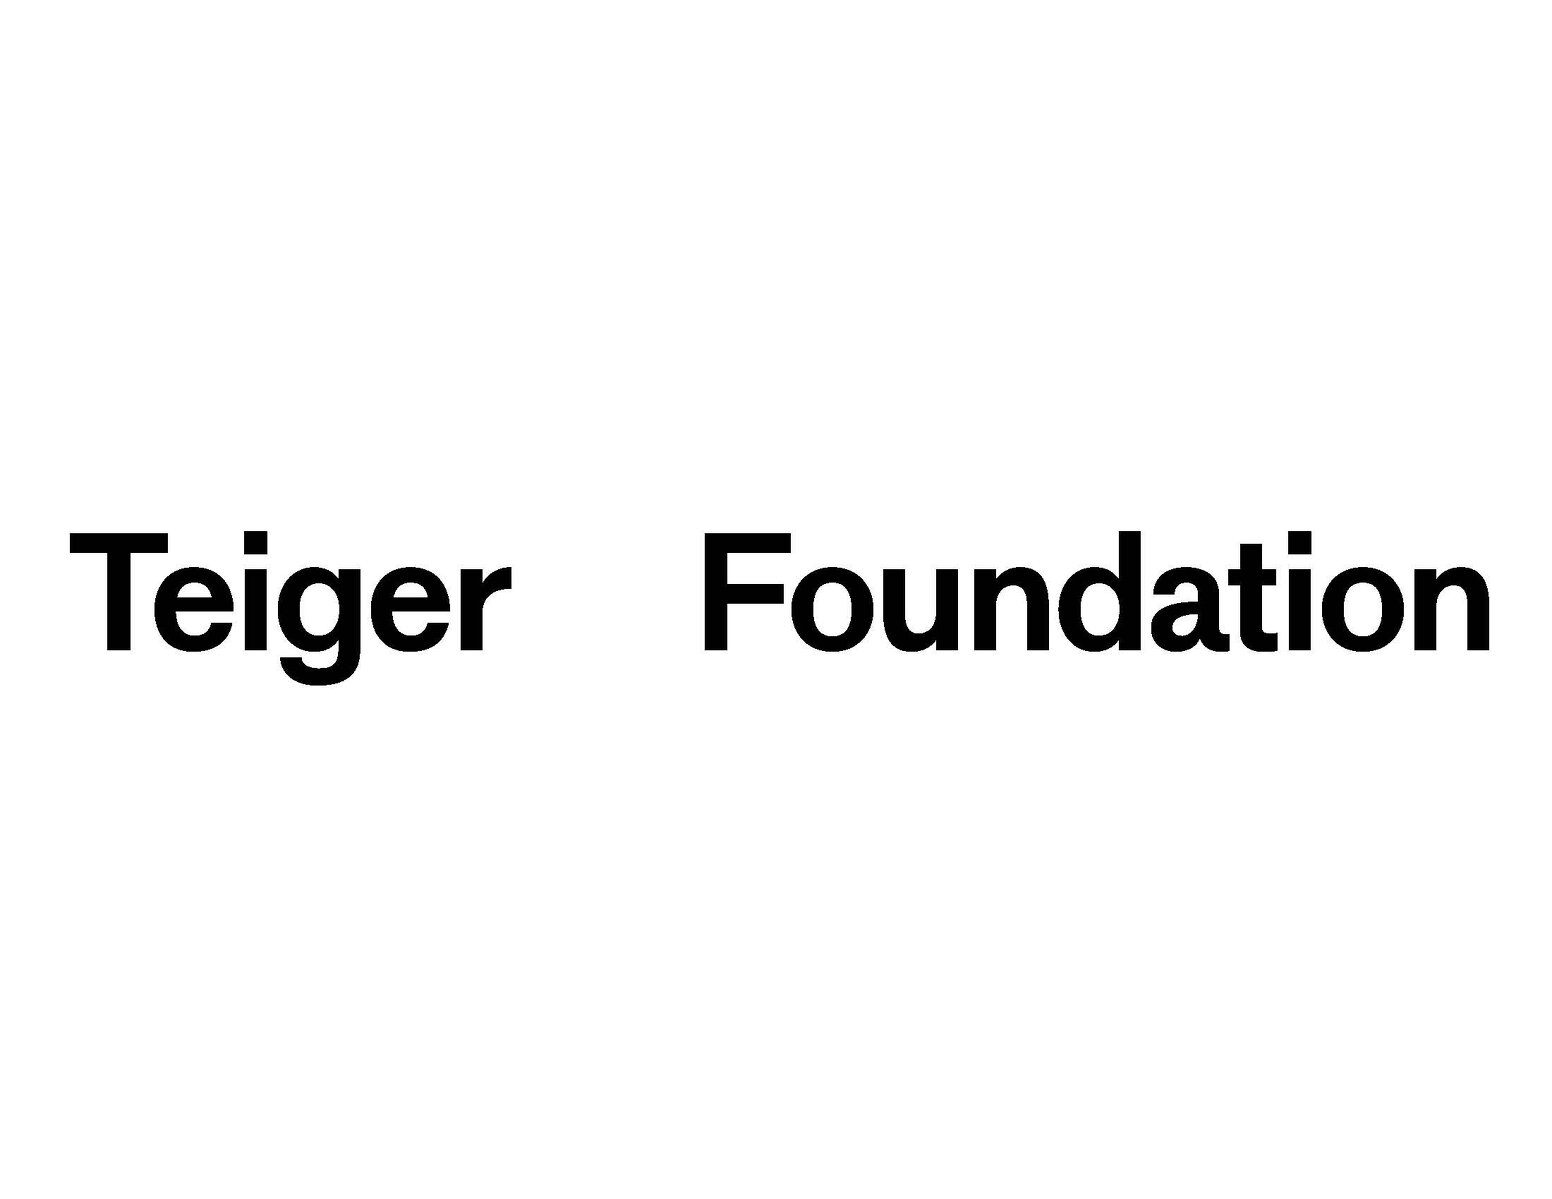 Teiger Foundation logo.